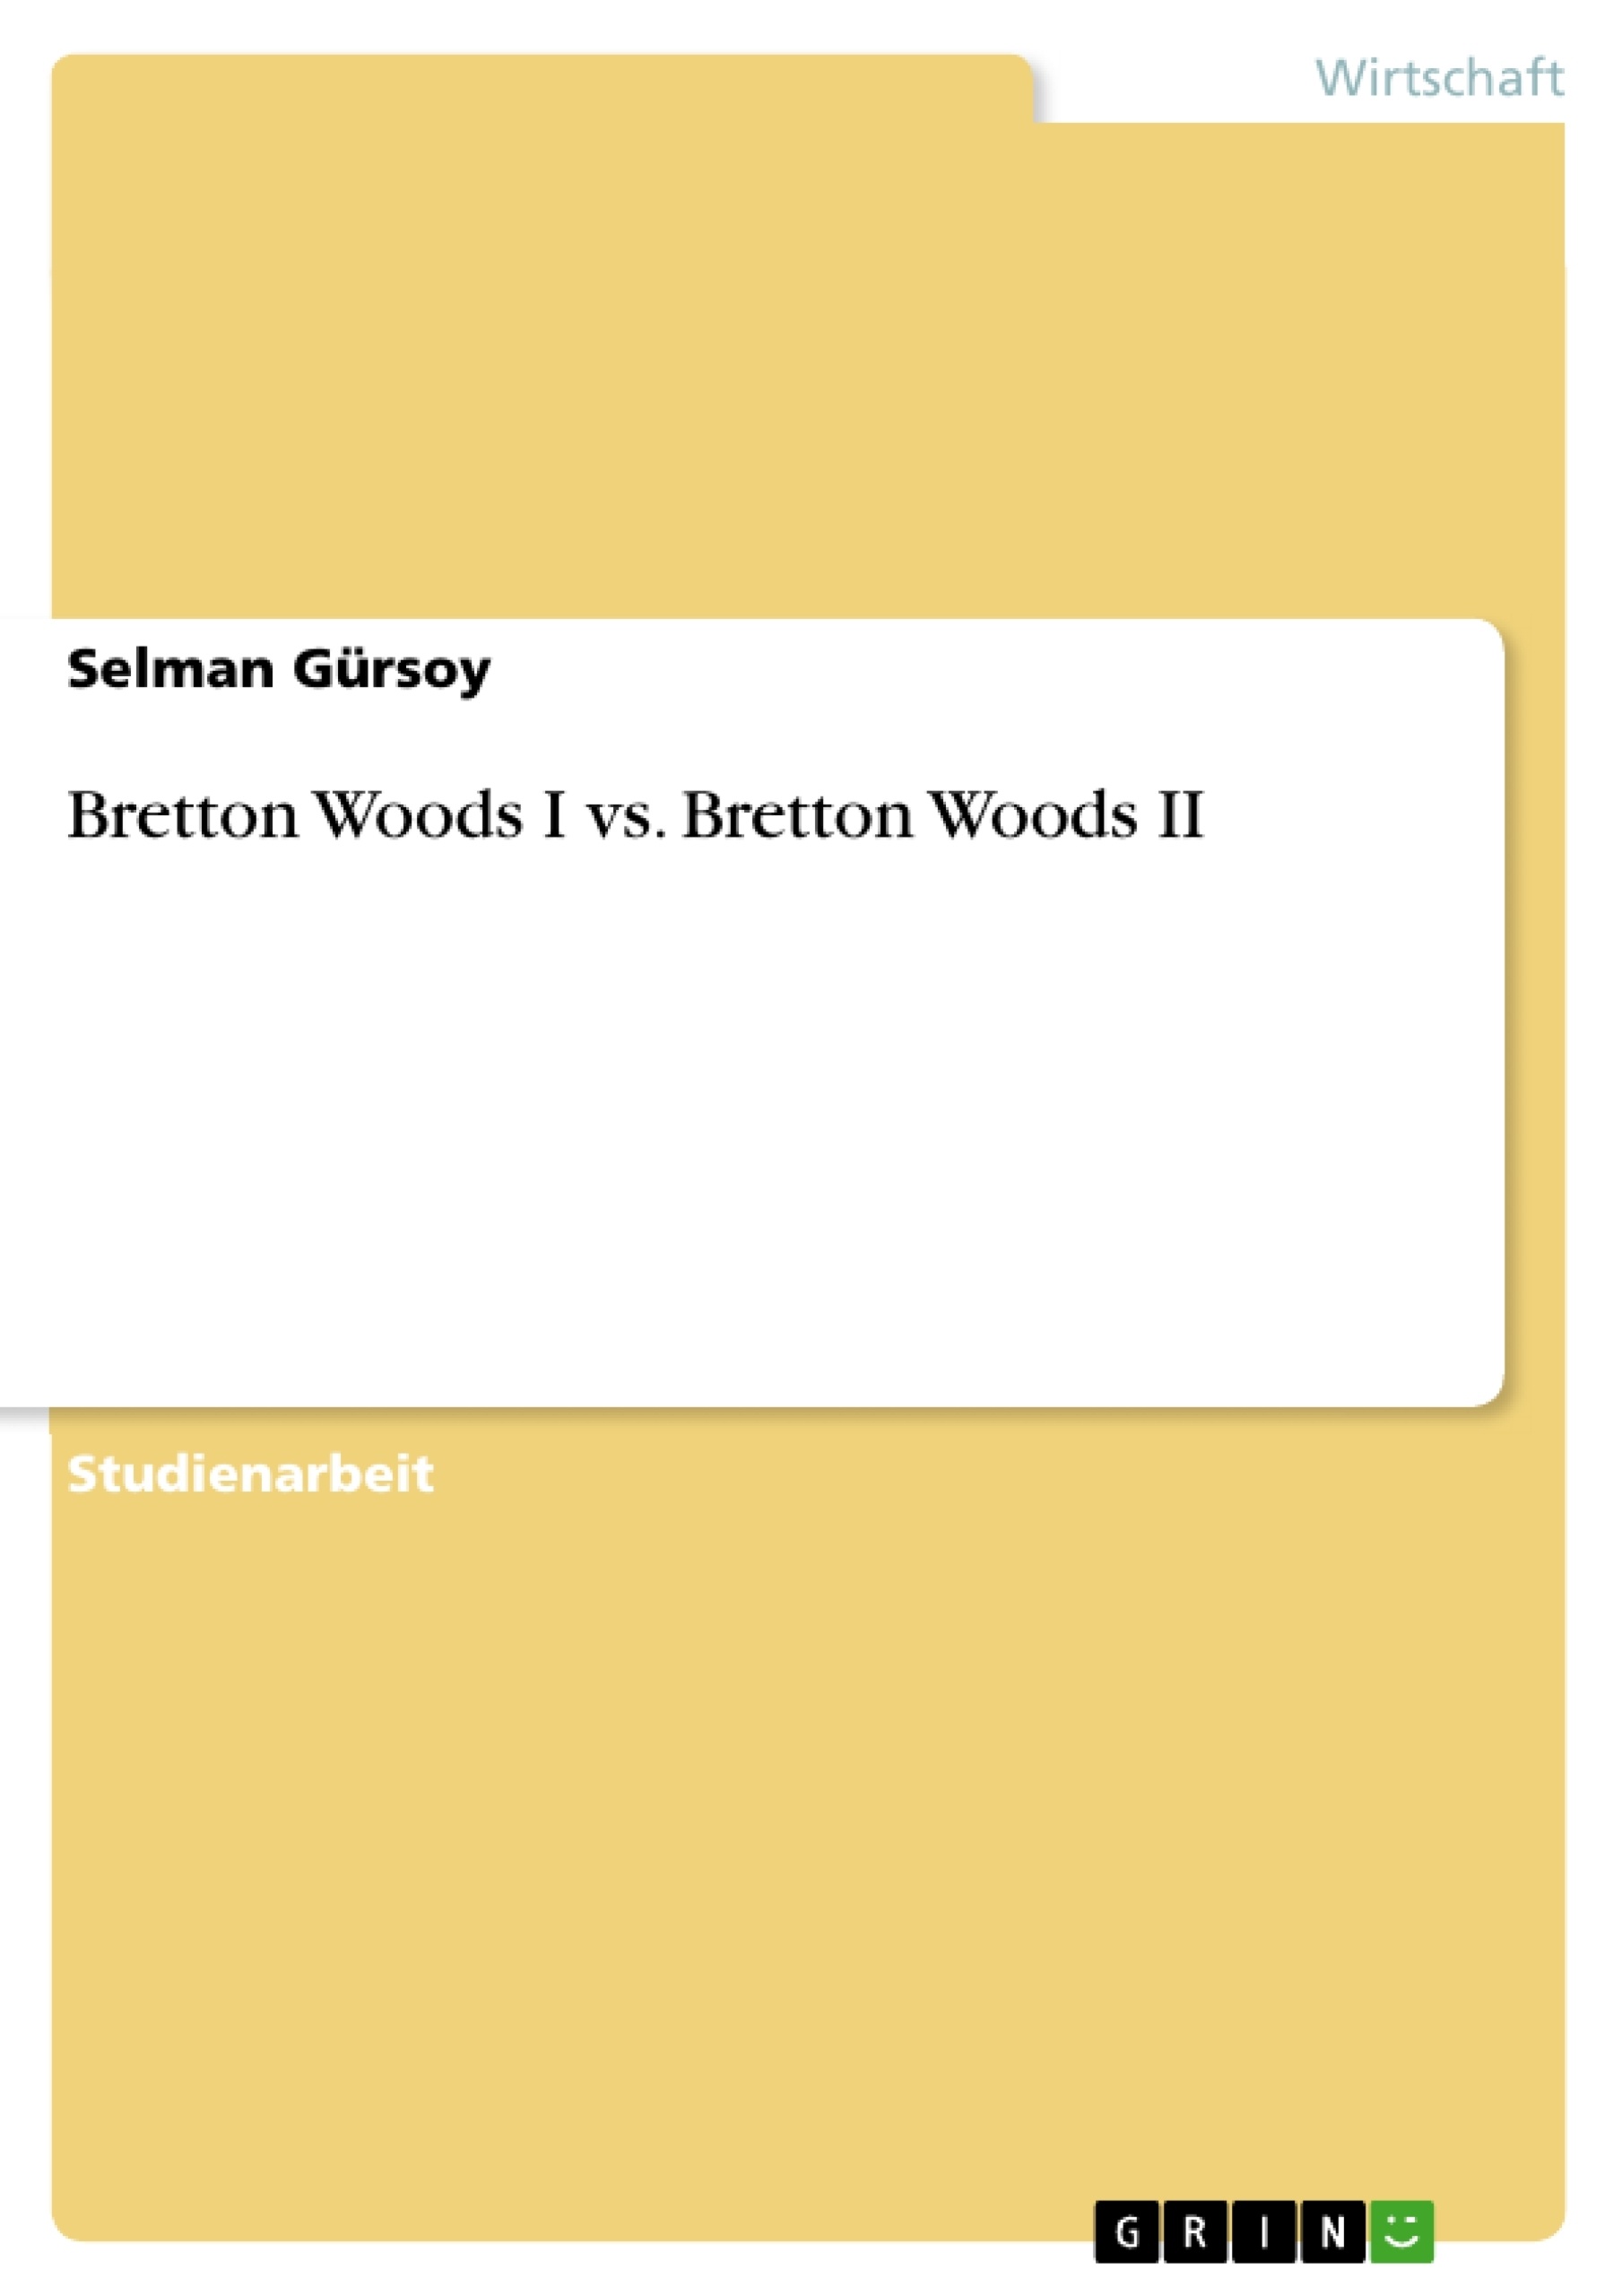 Titel: Bretton Woods I vs. Bretton Woods II